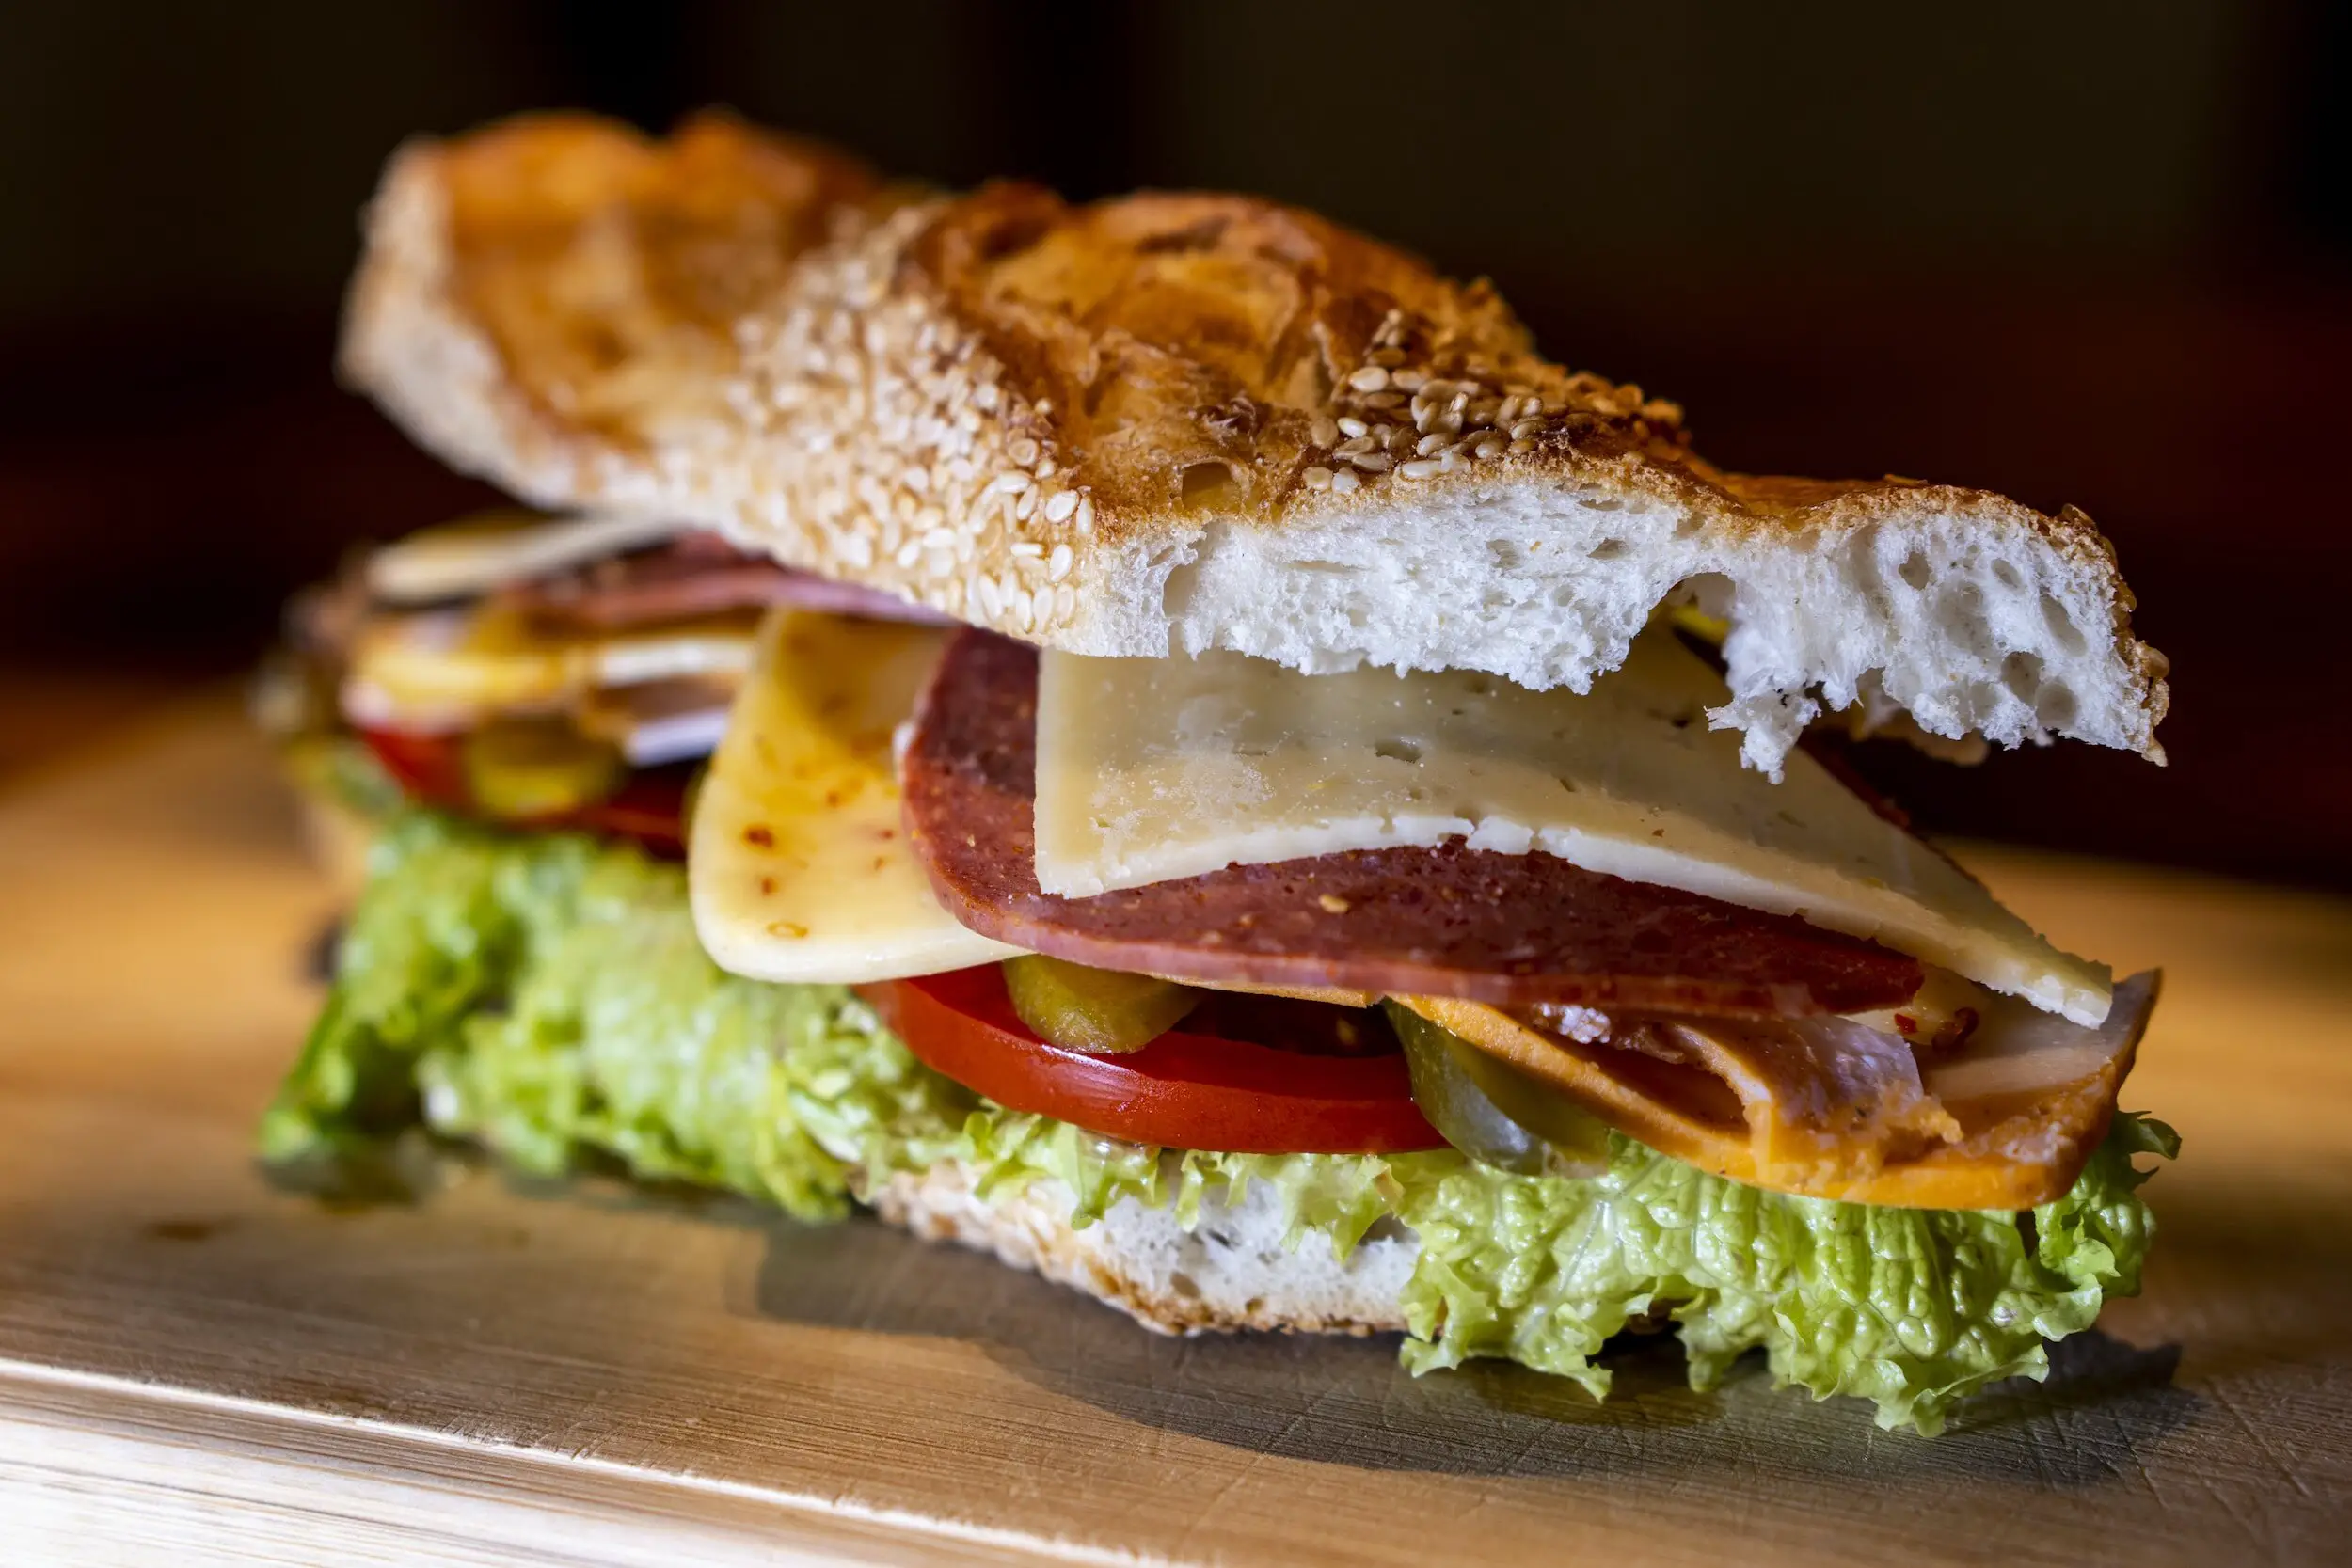 petit verdot food pairing - deli sandwich